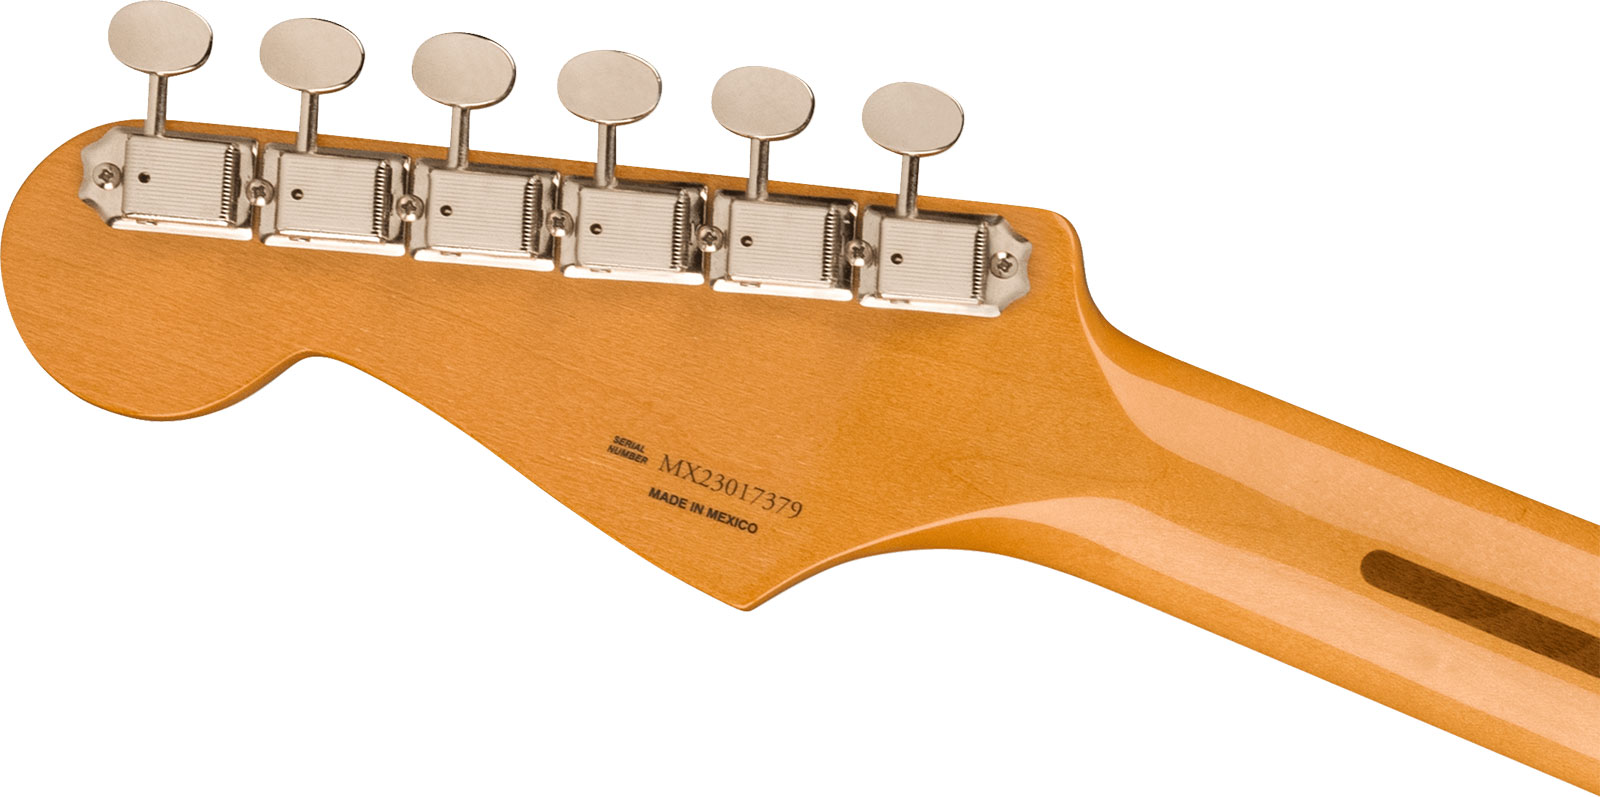 Fender Strat 50s Vintera 2 Mex 3s Trem Mn - Ocean Turquoise - Str shape electric guitar - Variation 3